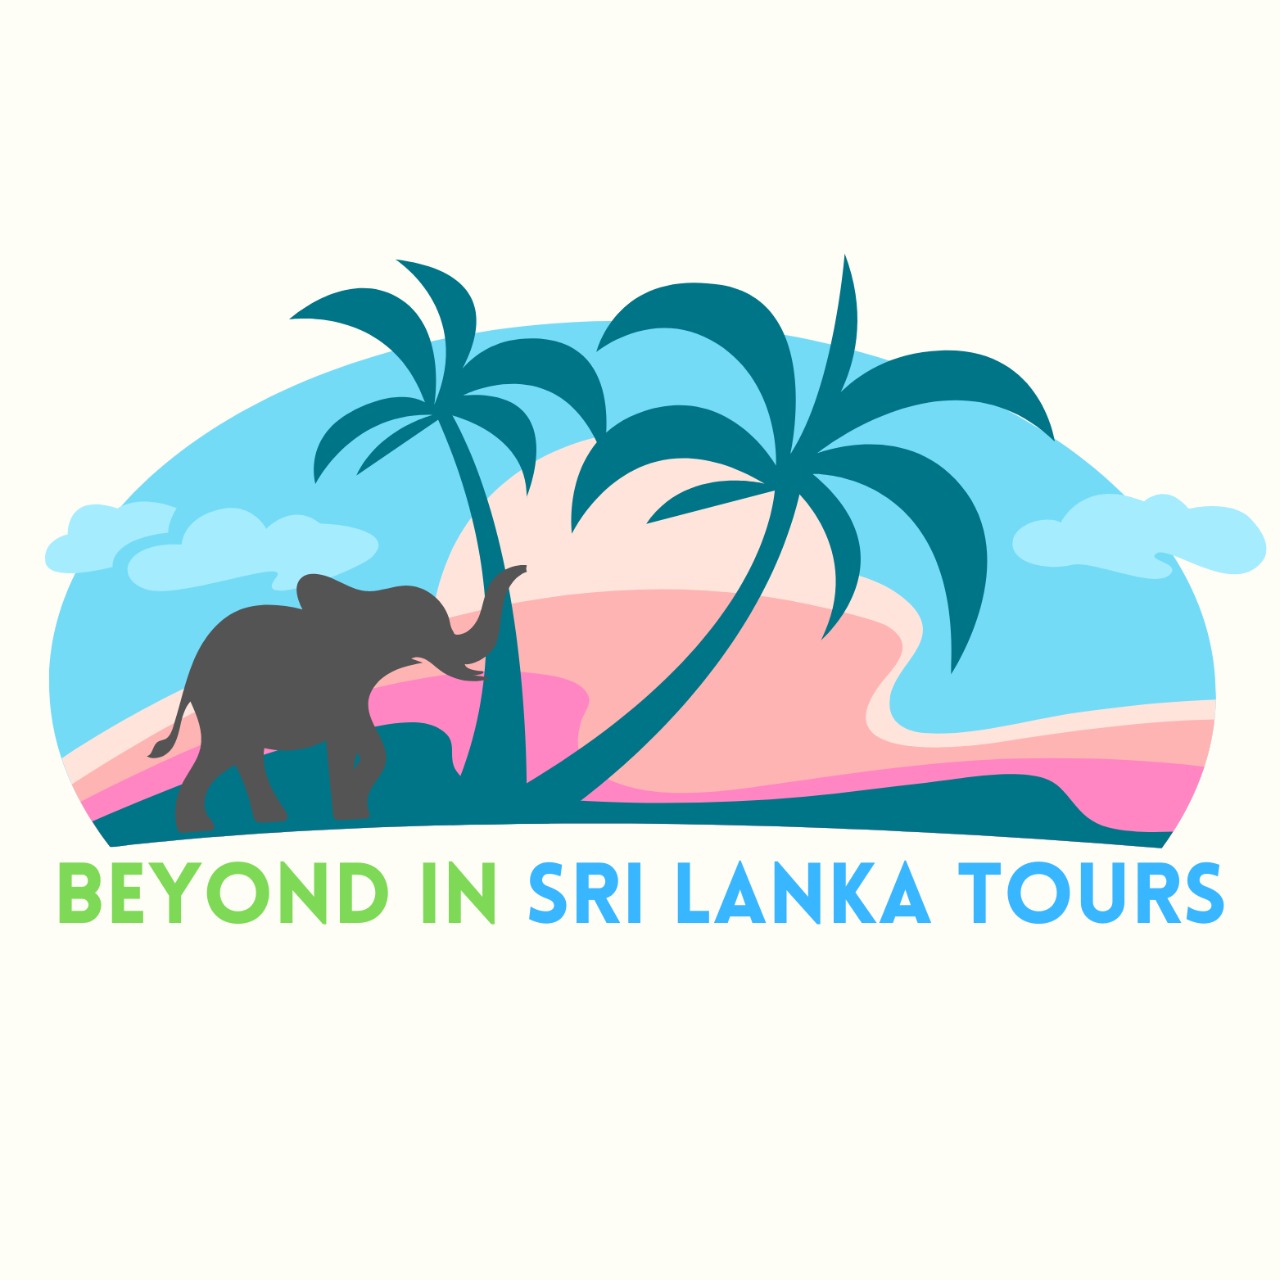 Beyond in Sri Lanka Tours